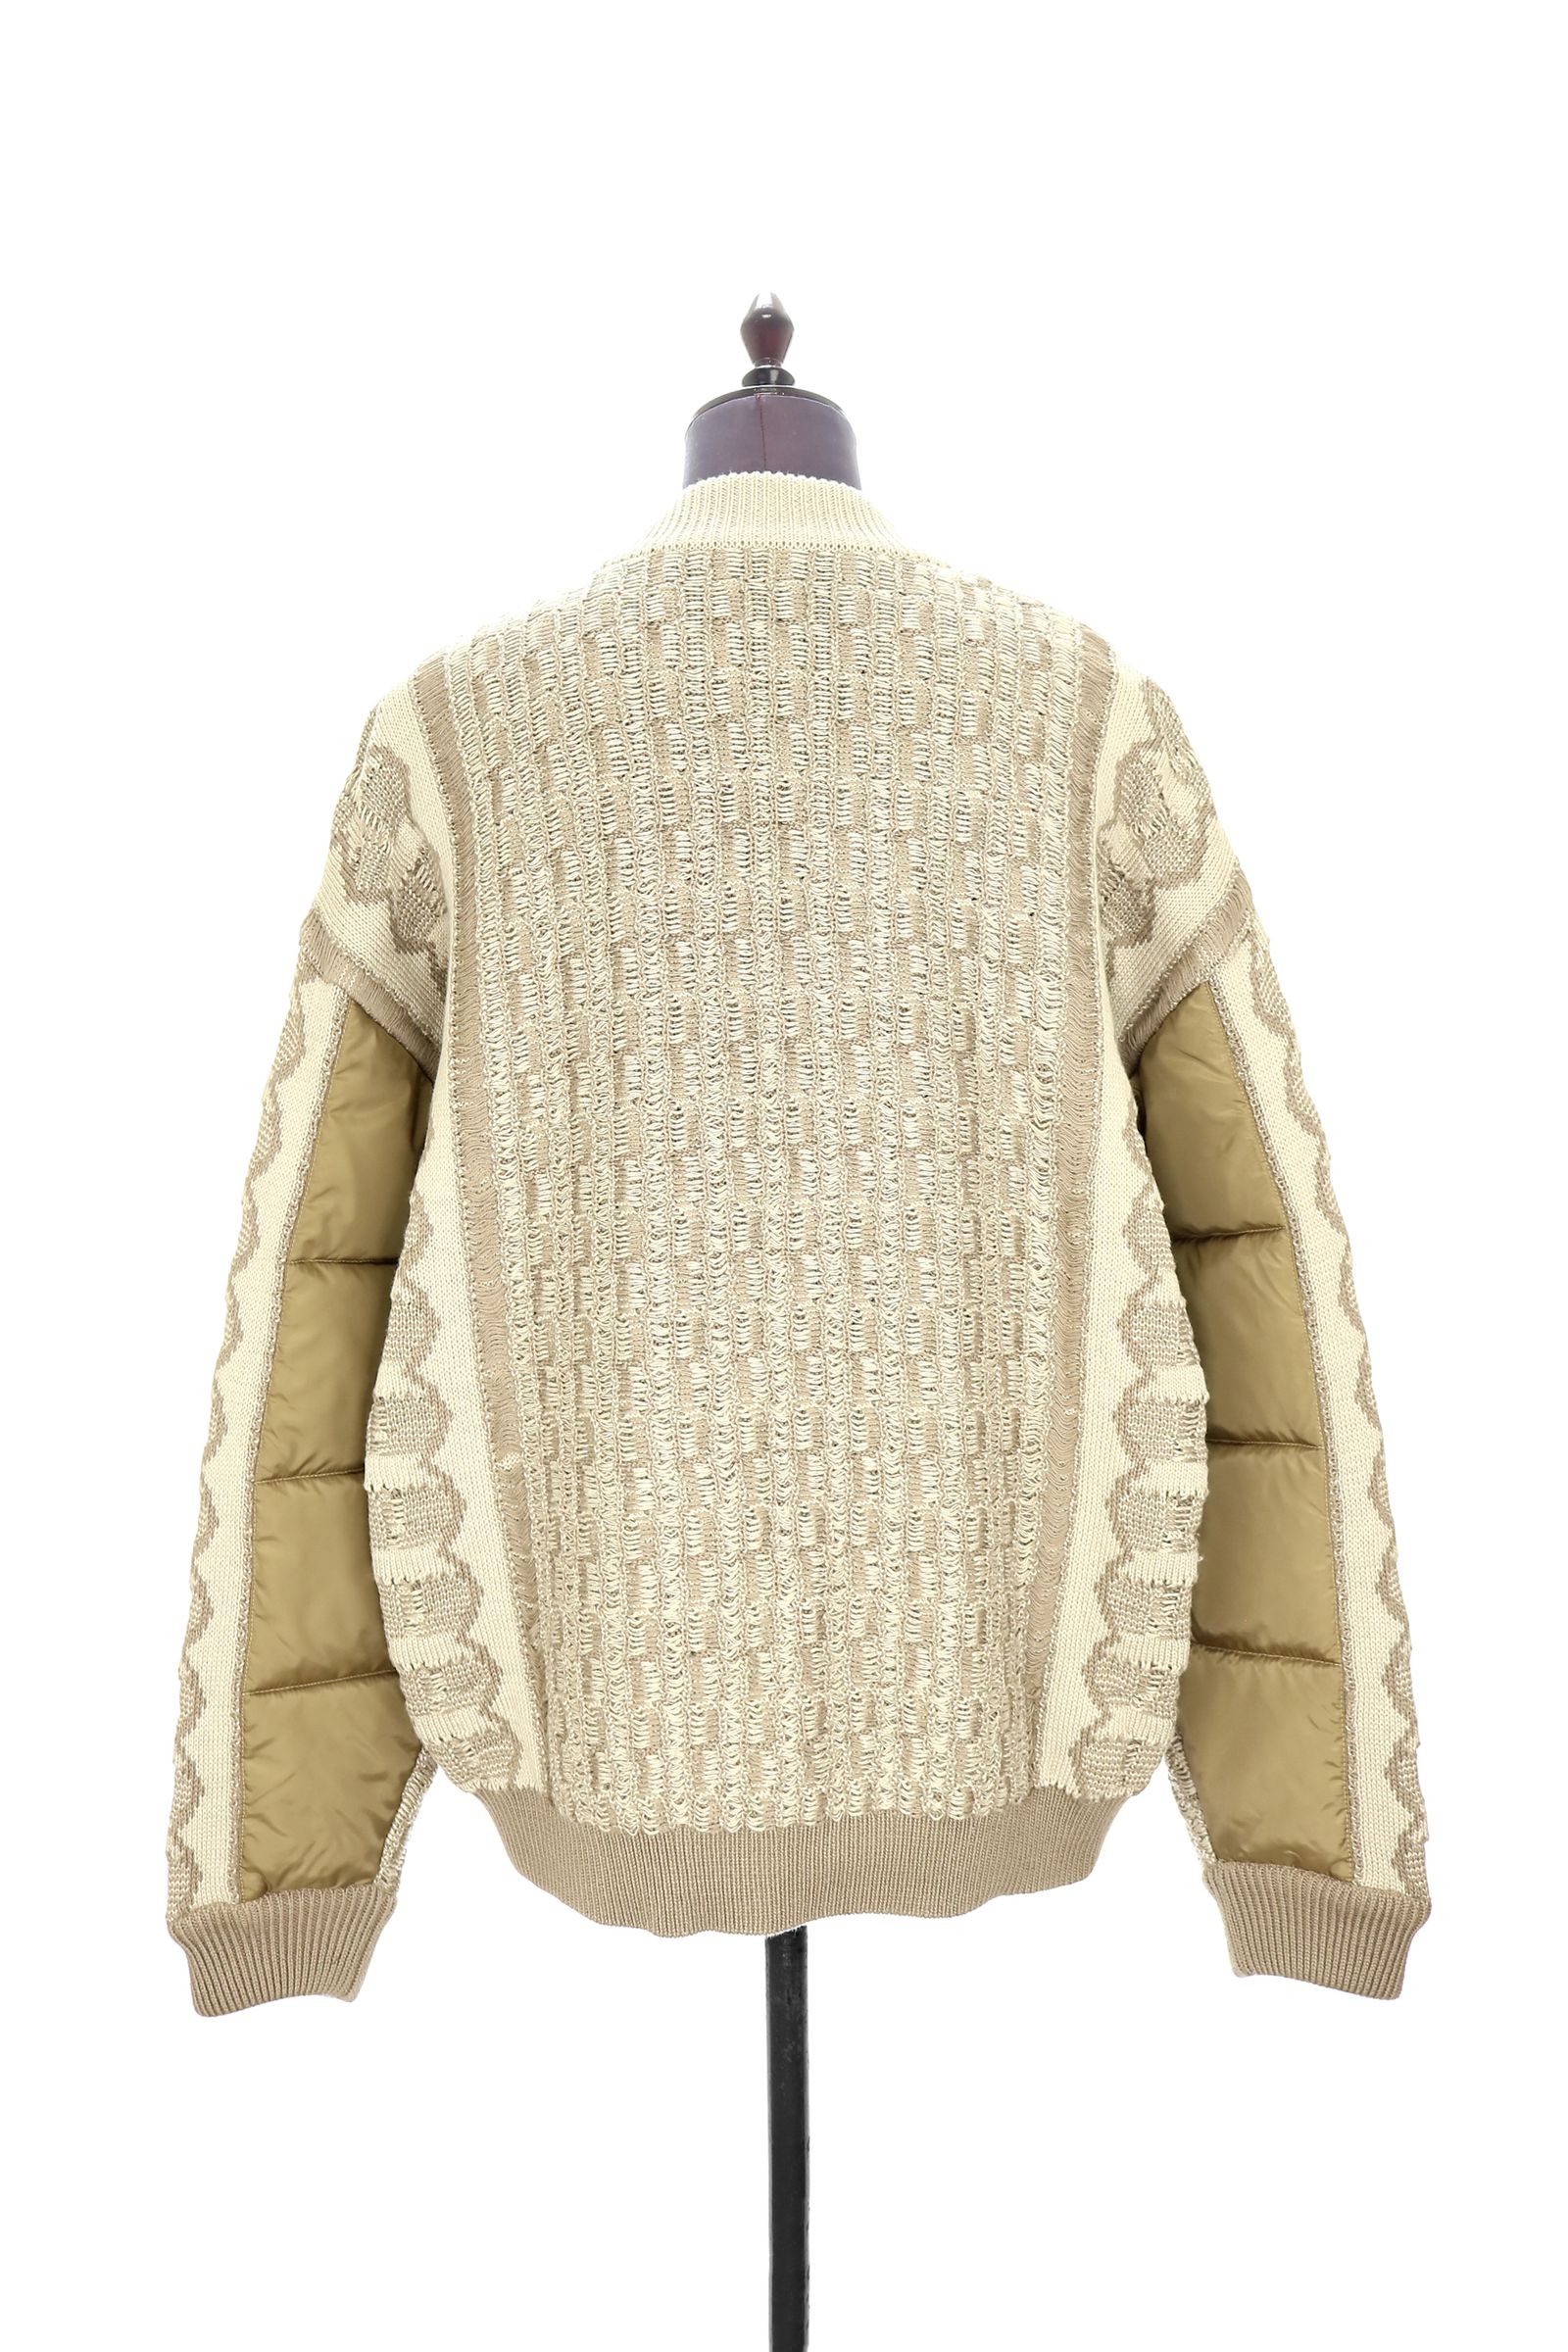 elephant TRIBAL fabrics - Hybrid Knit / GREEN | Retikle Online Store